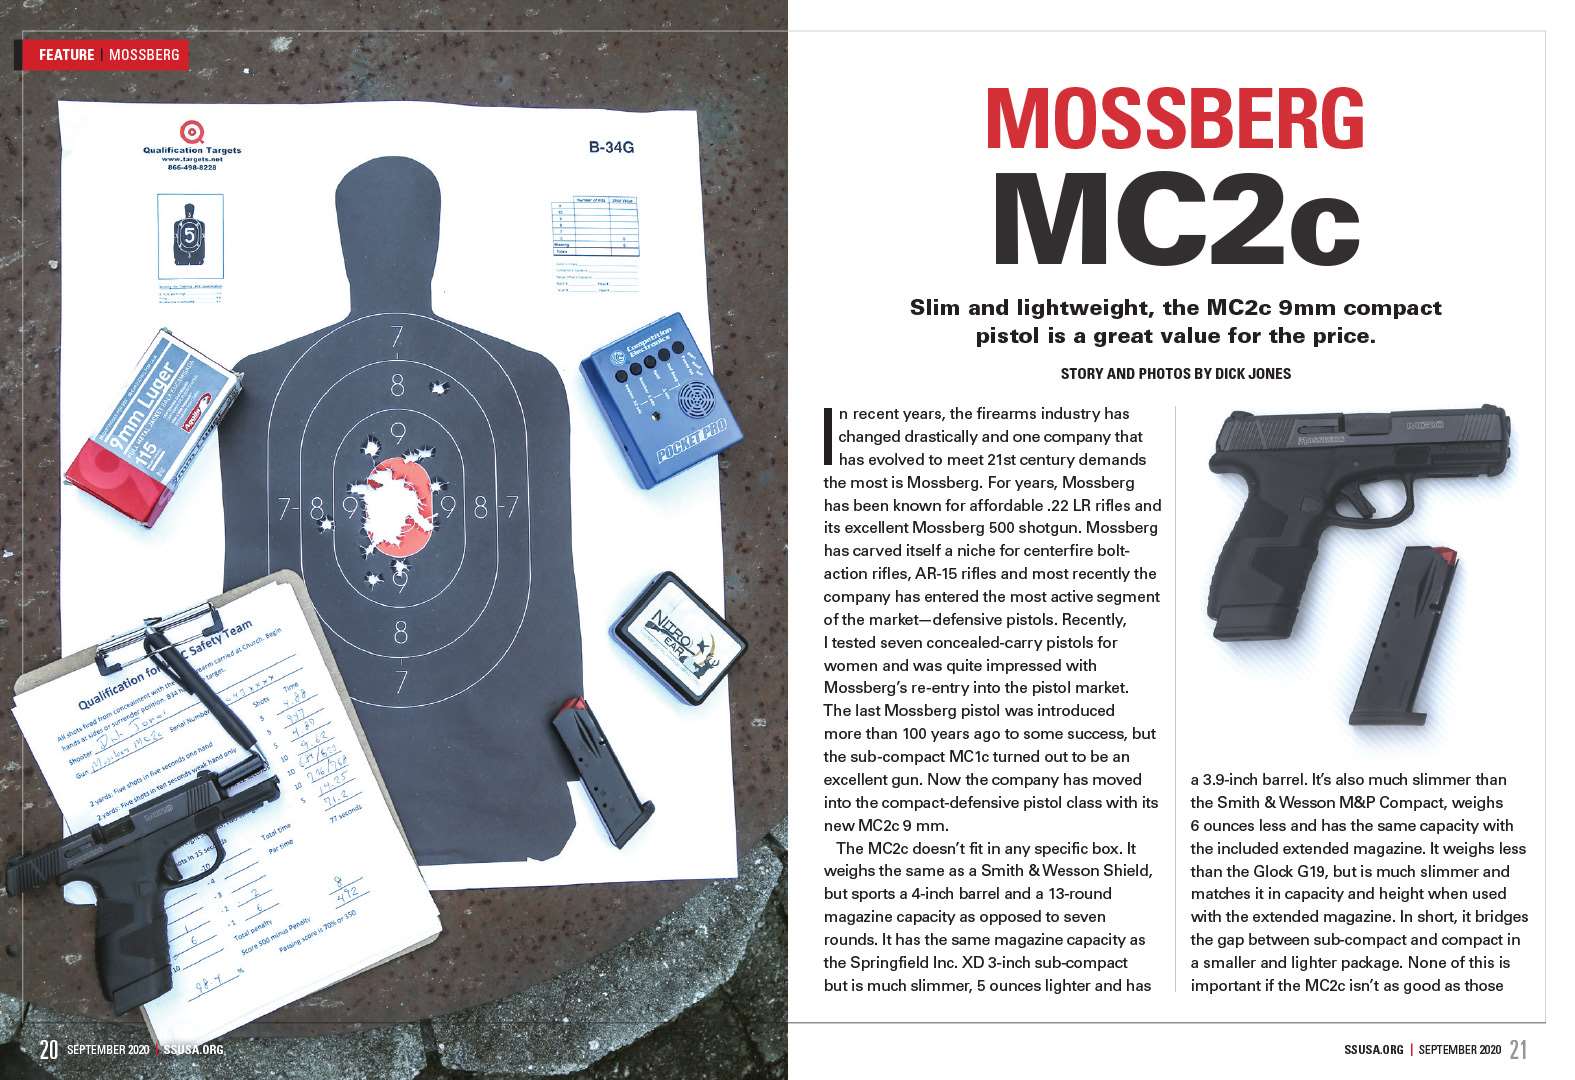 Mossberg MC2c compact 9mm pistol